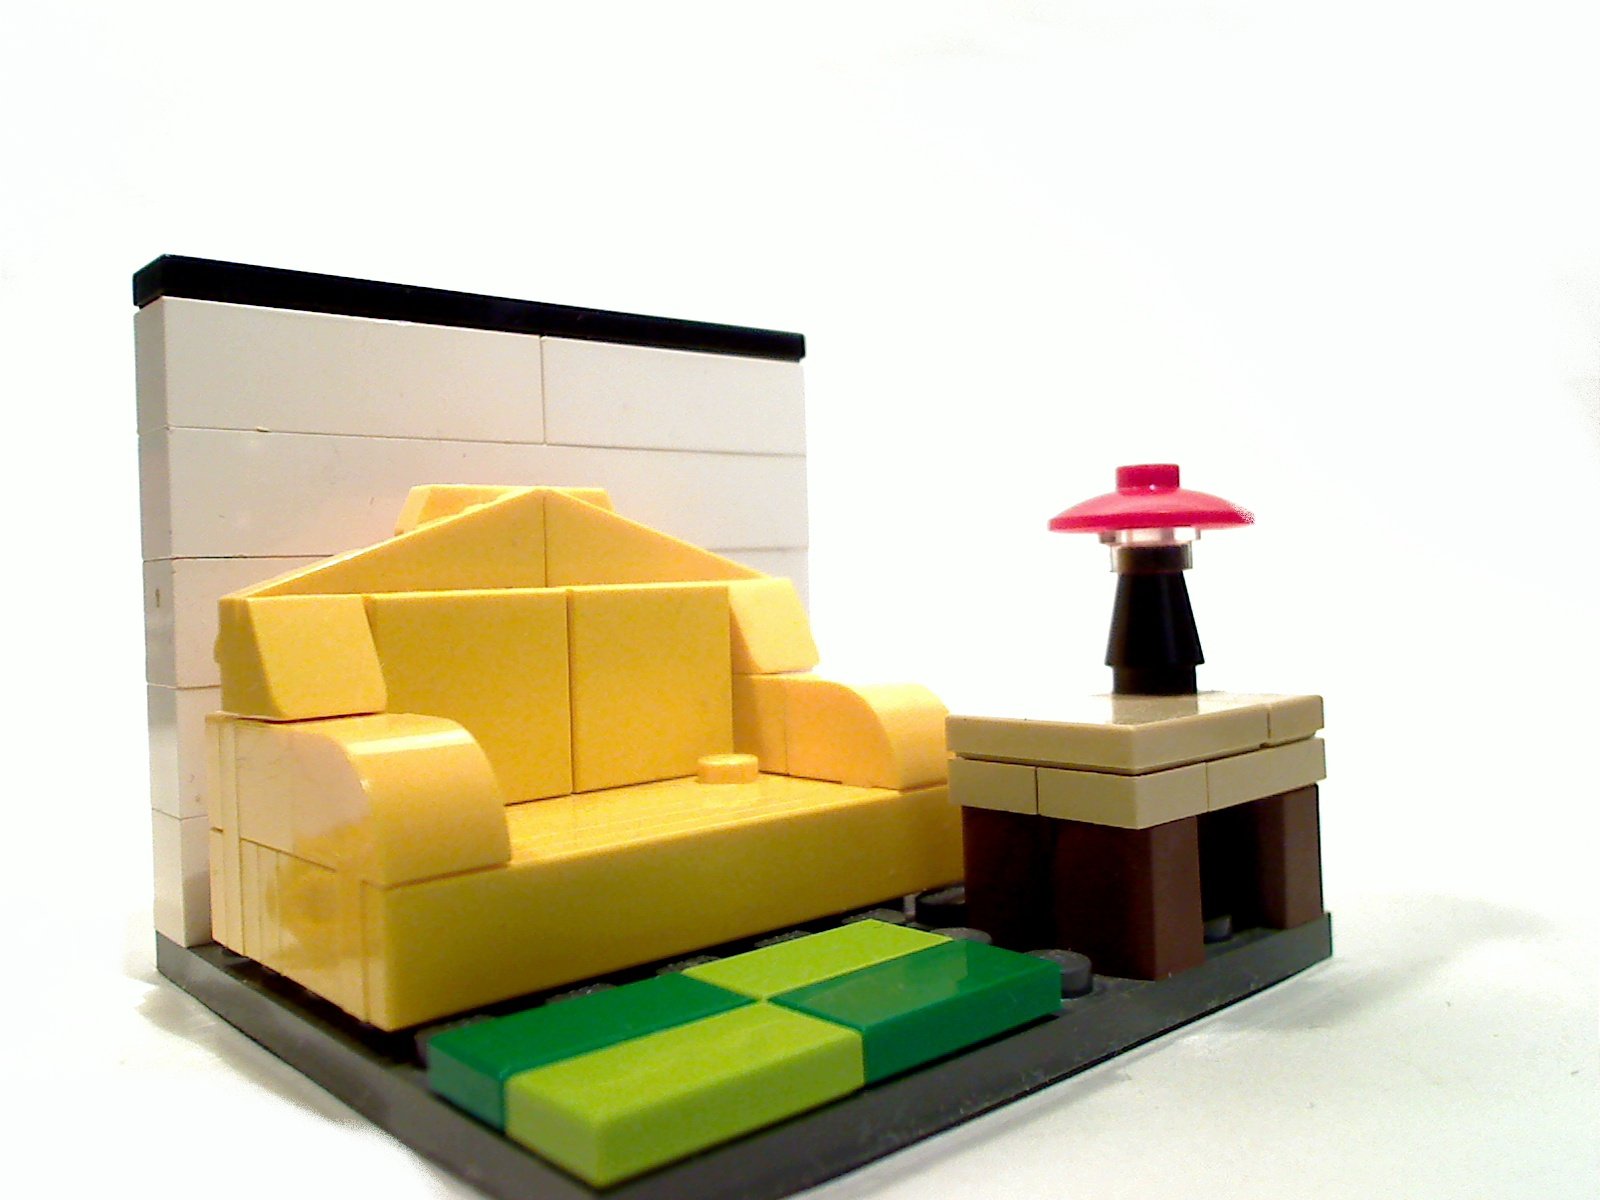 http://www.brickshelf.com/gallery/CheeseBrick/Couch/picture_40.jpg